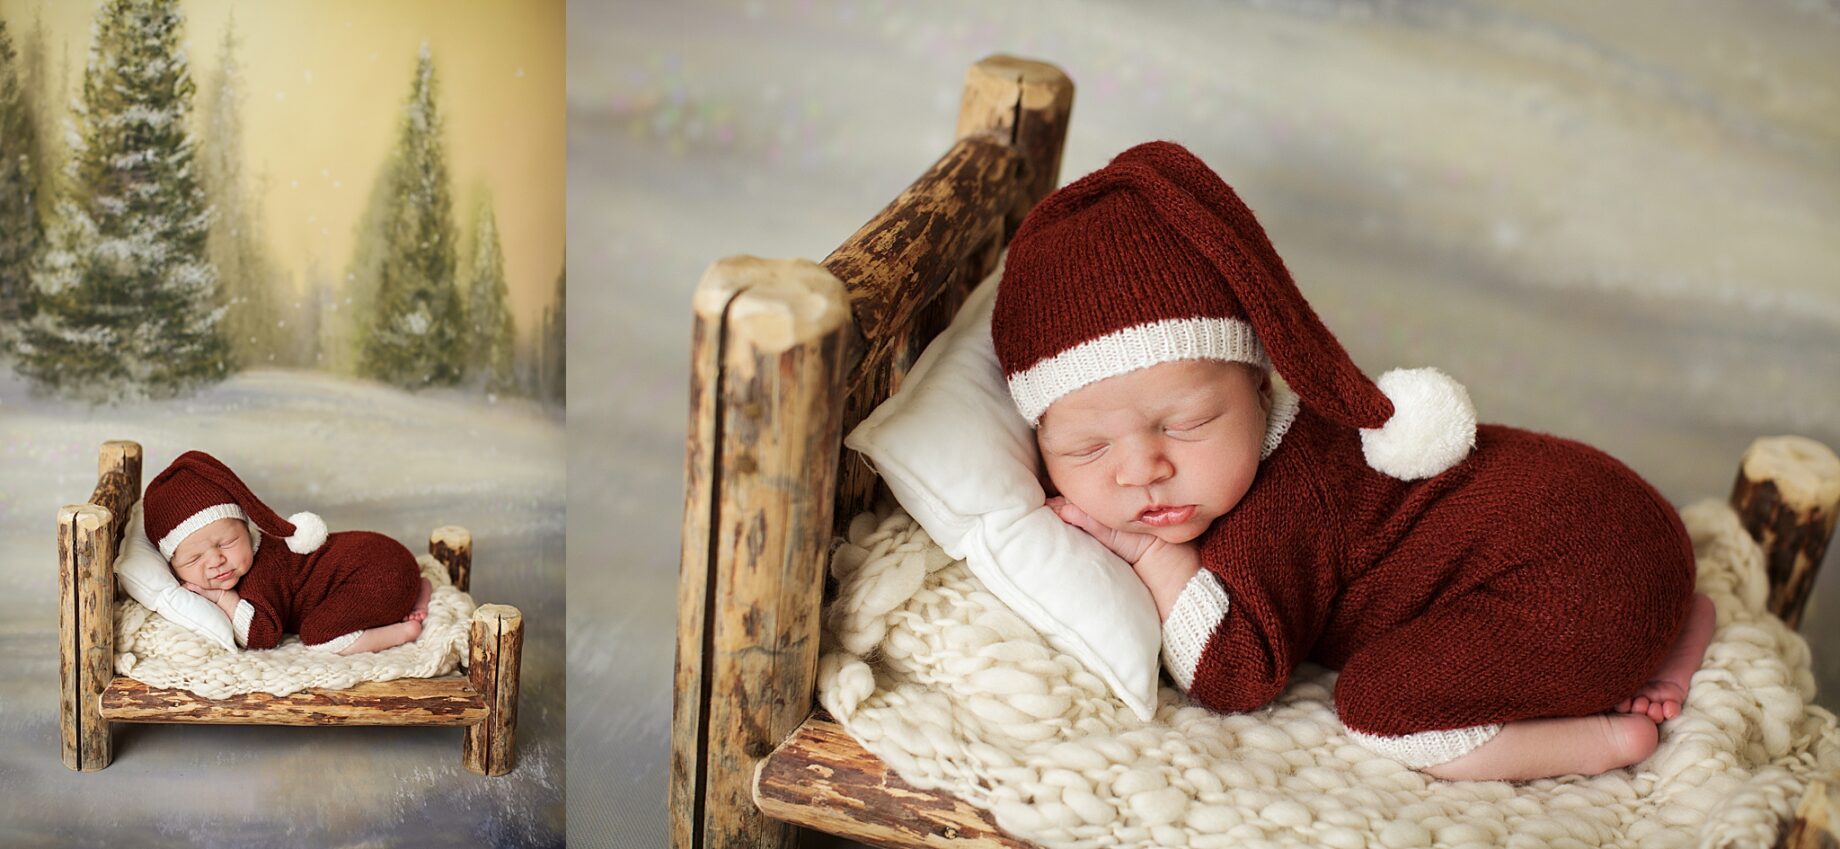 Farmington Missouri Newborn photographer, perryville newborn photographer, Christmas, baby Santa, Christmas newborn photos, intuition backgrounds, Santa hat, baby sleeping, wood bed